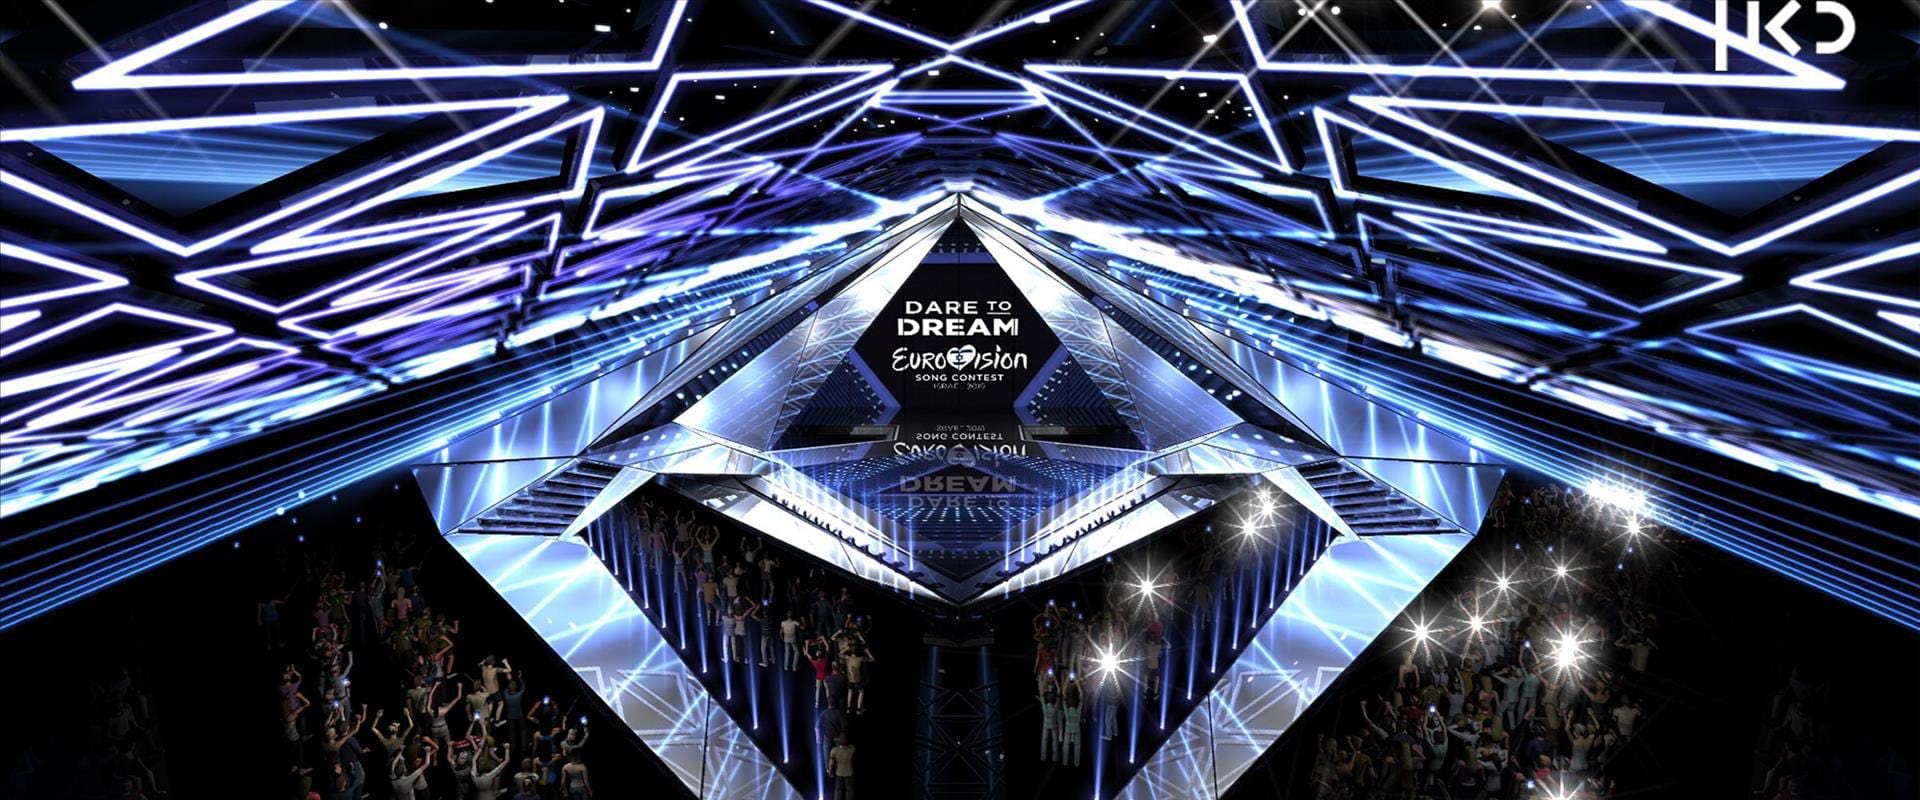 eurovision 2019 tel aviv